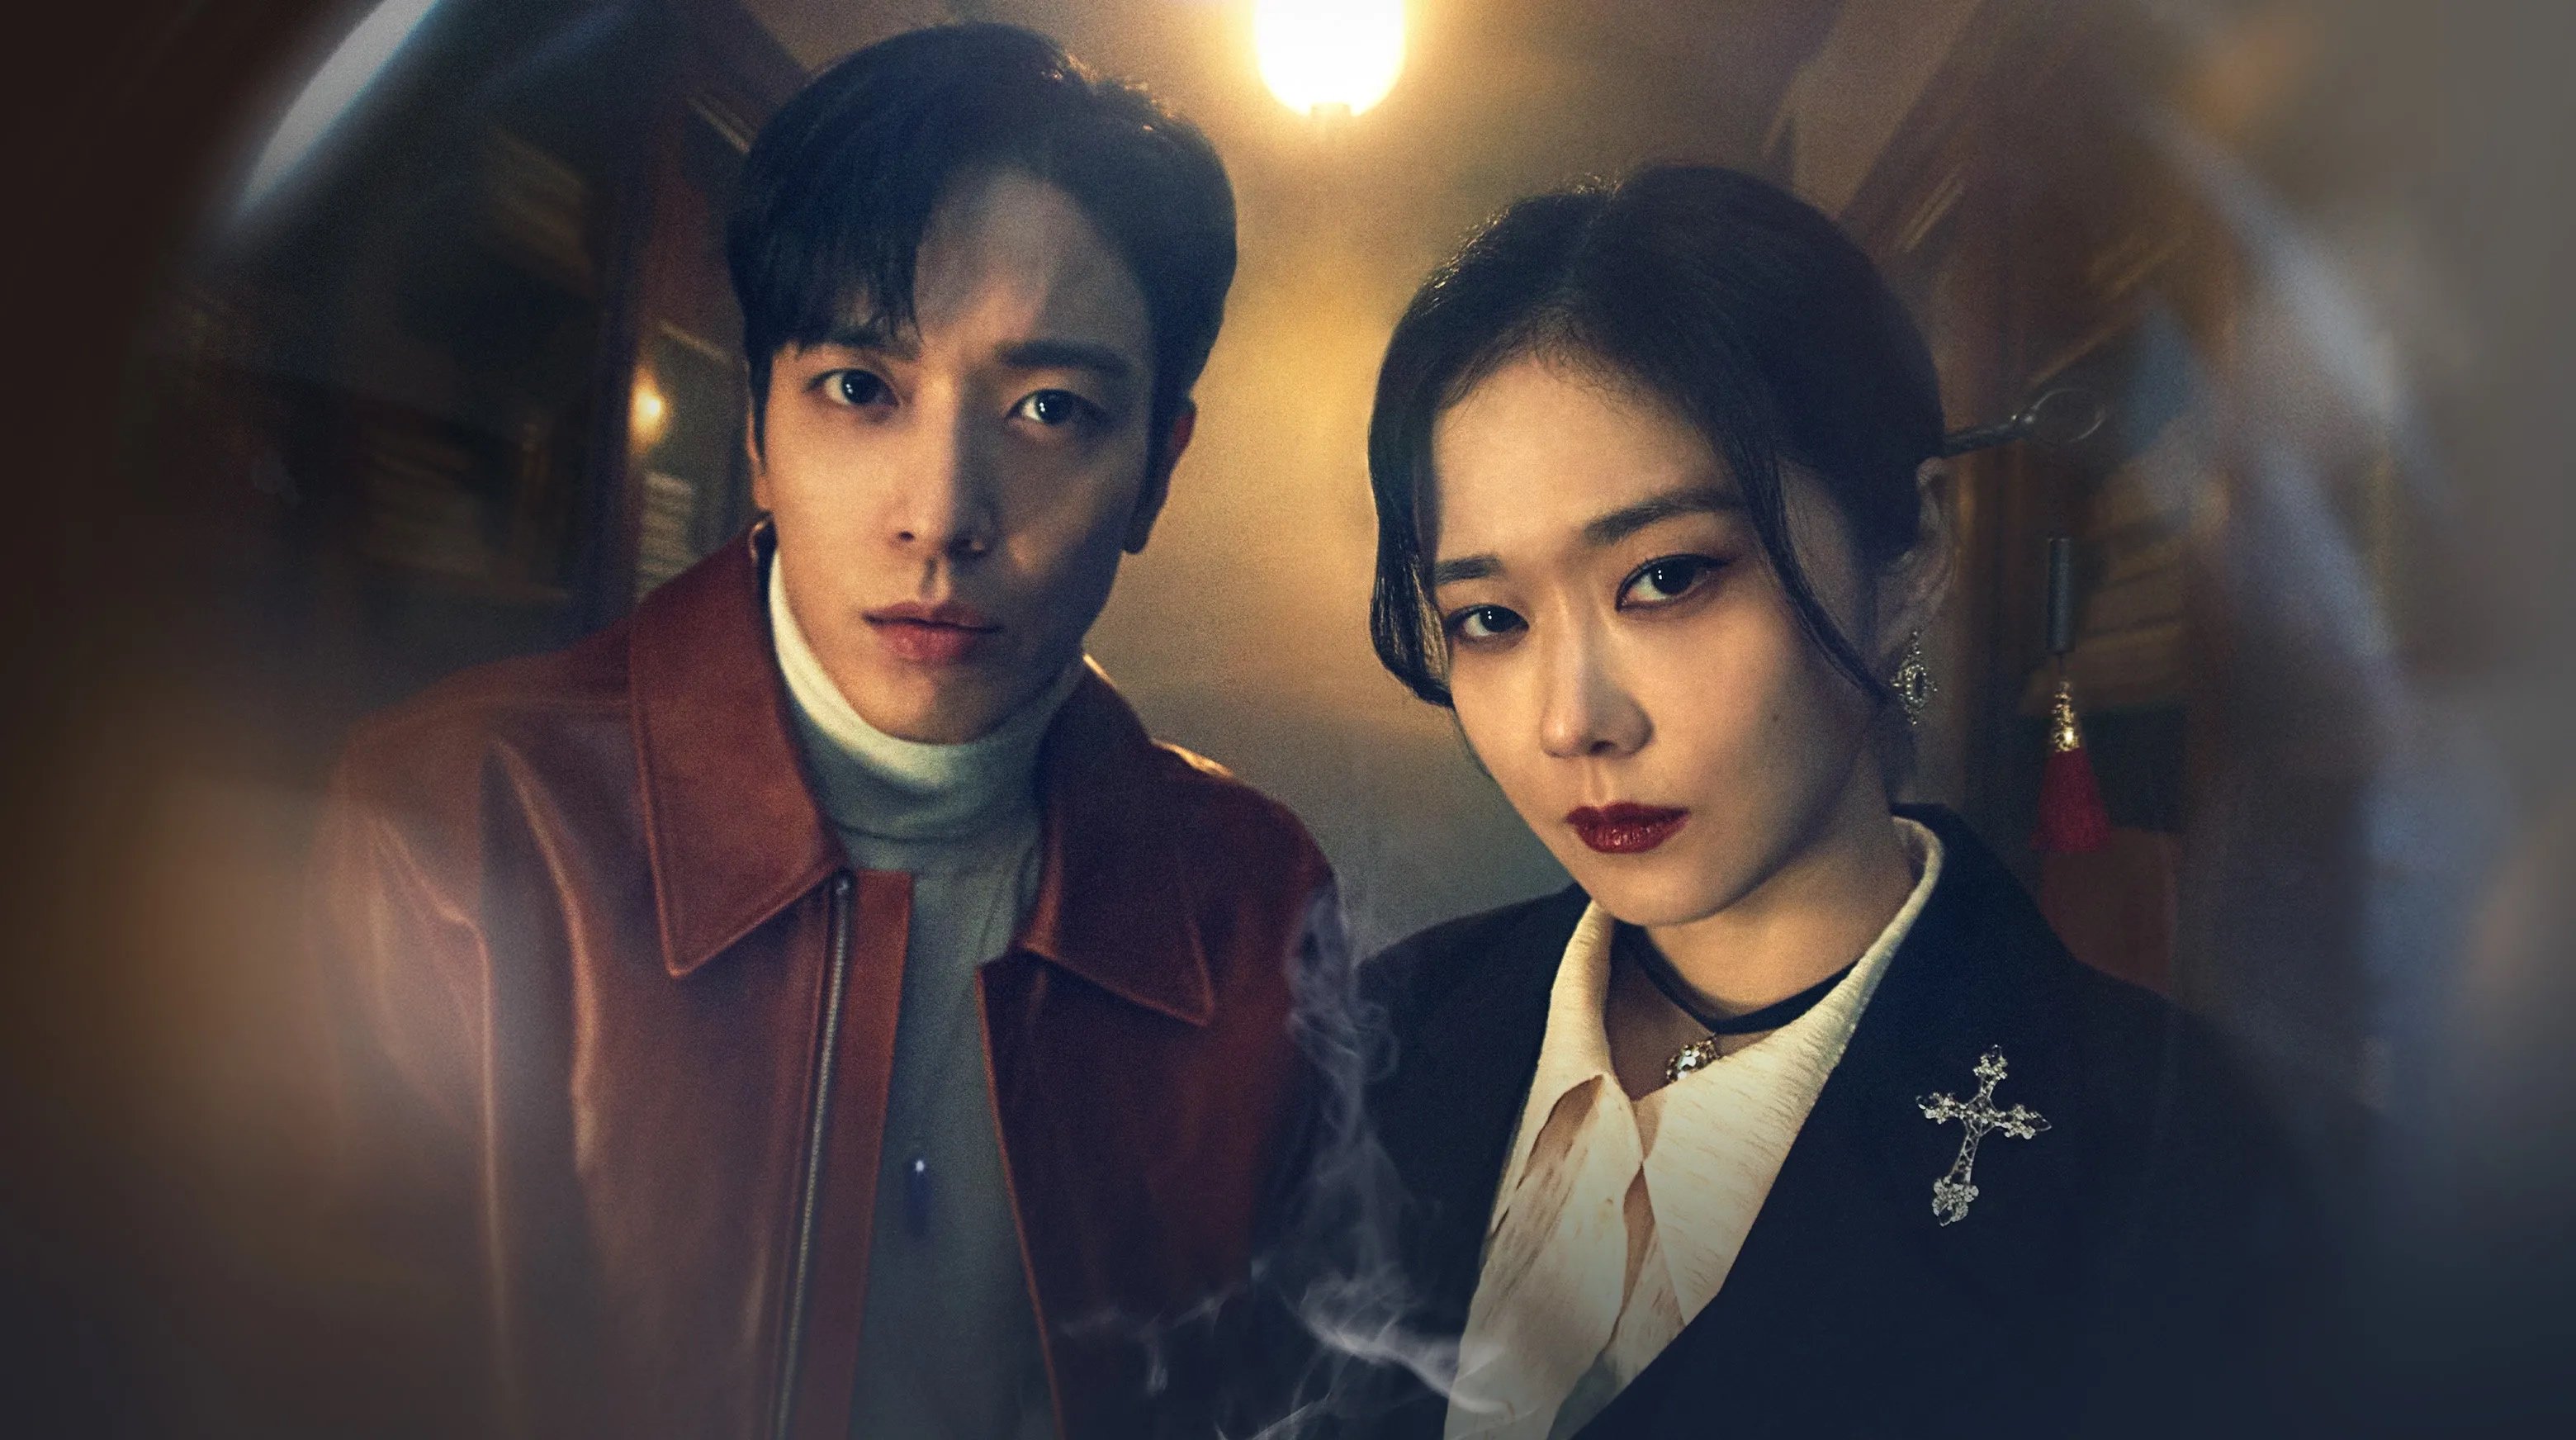 Actors Jung Yong-hwa and Jang Na-ra for 'Sell Your Haunted House' looking through fisheye camera